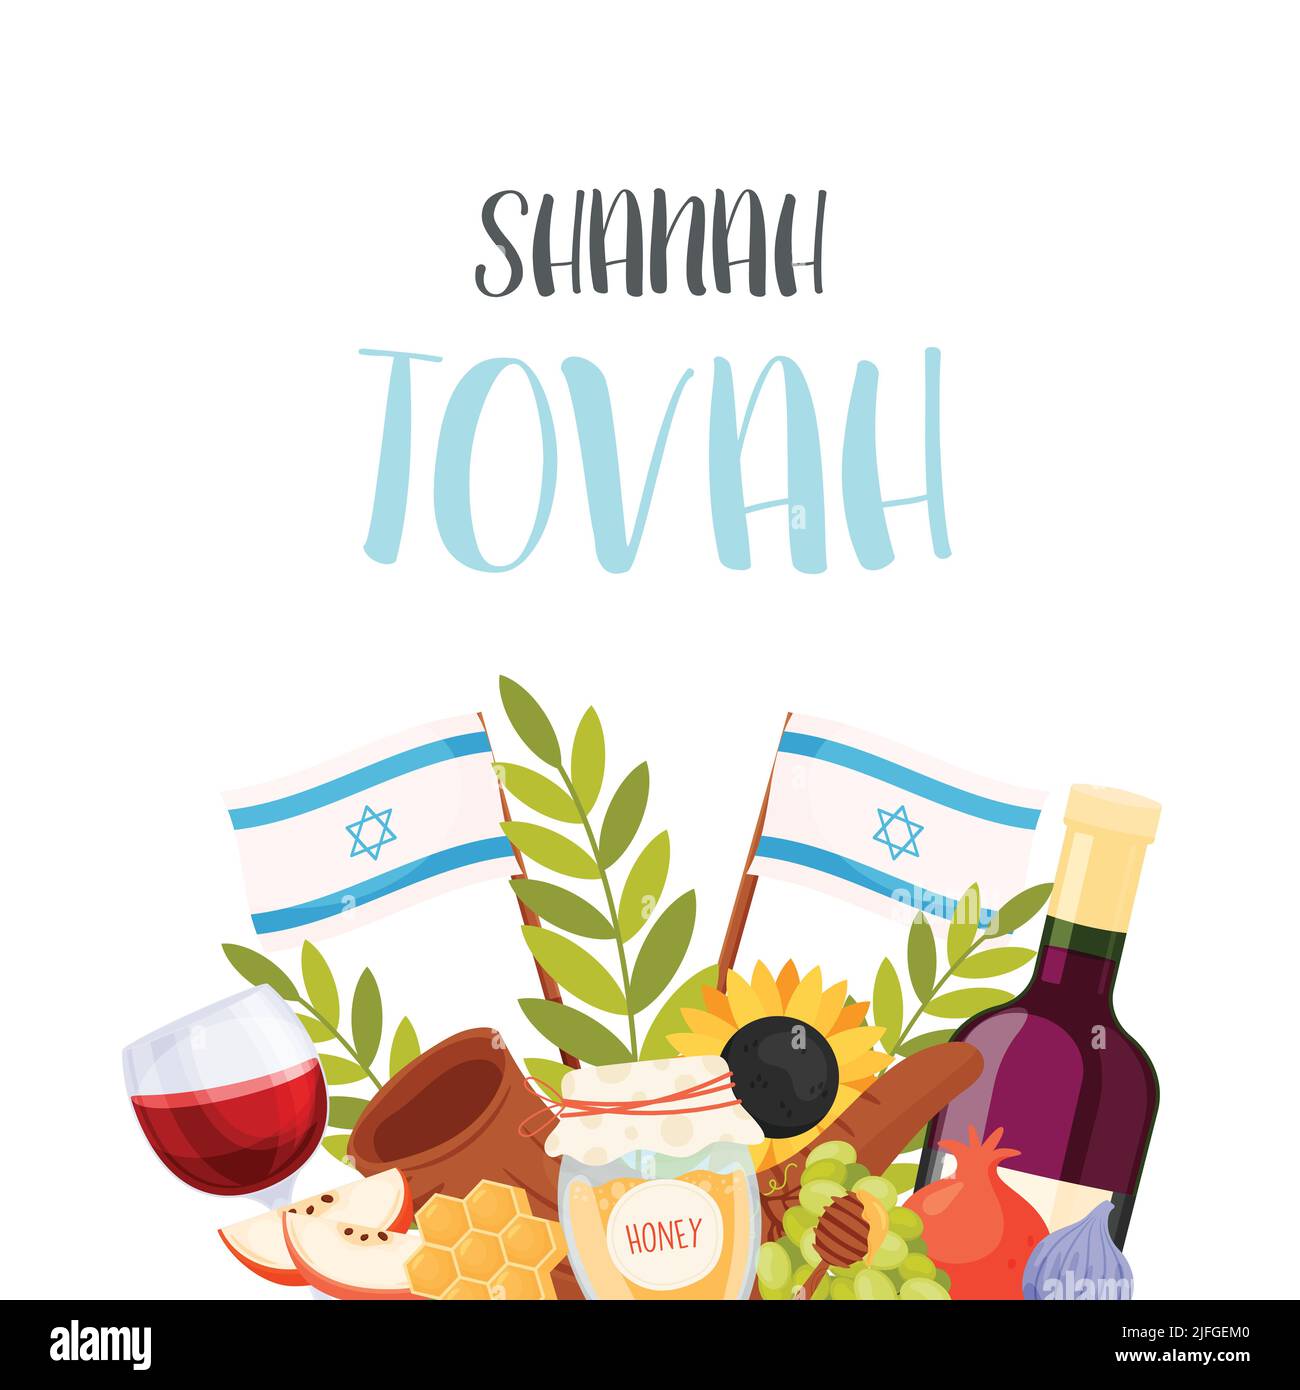 Happy Rosh Hashanah day, Shana Tova greeting card. Vector illustration Stock Vector